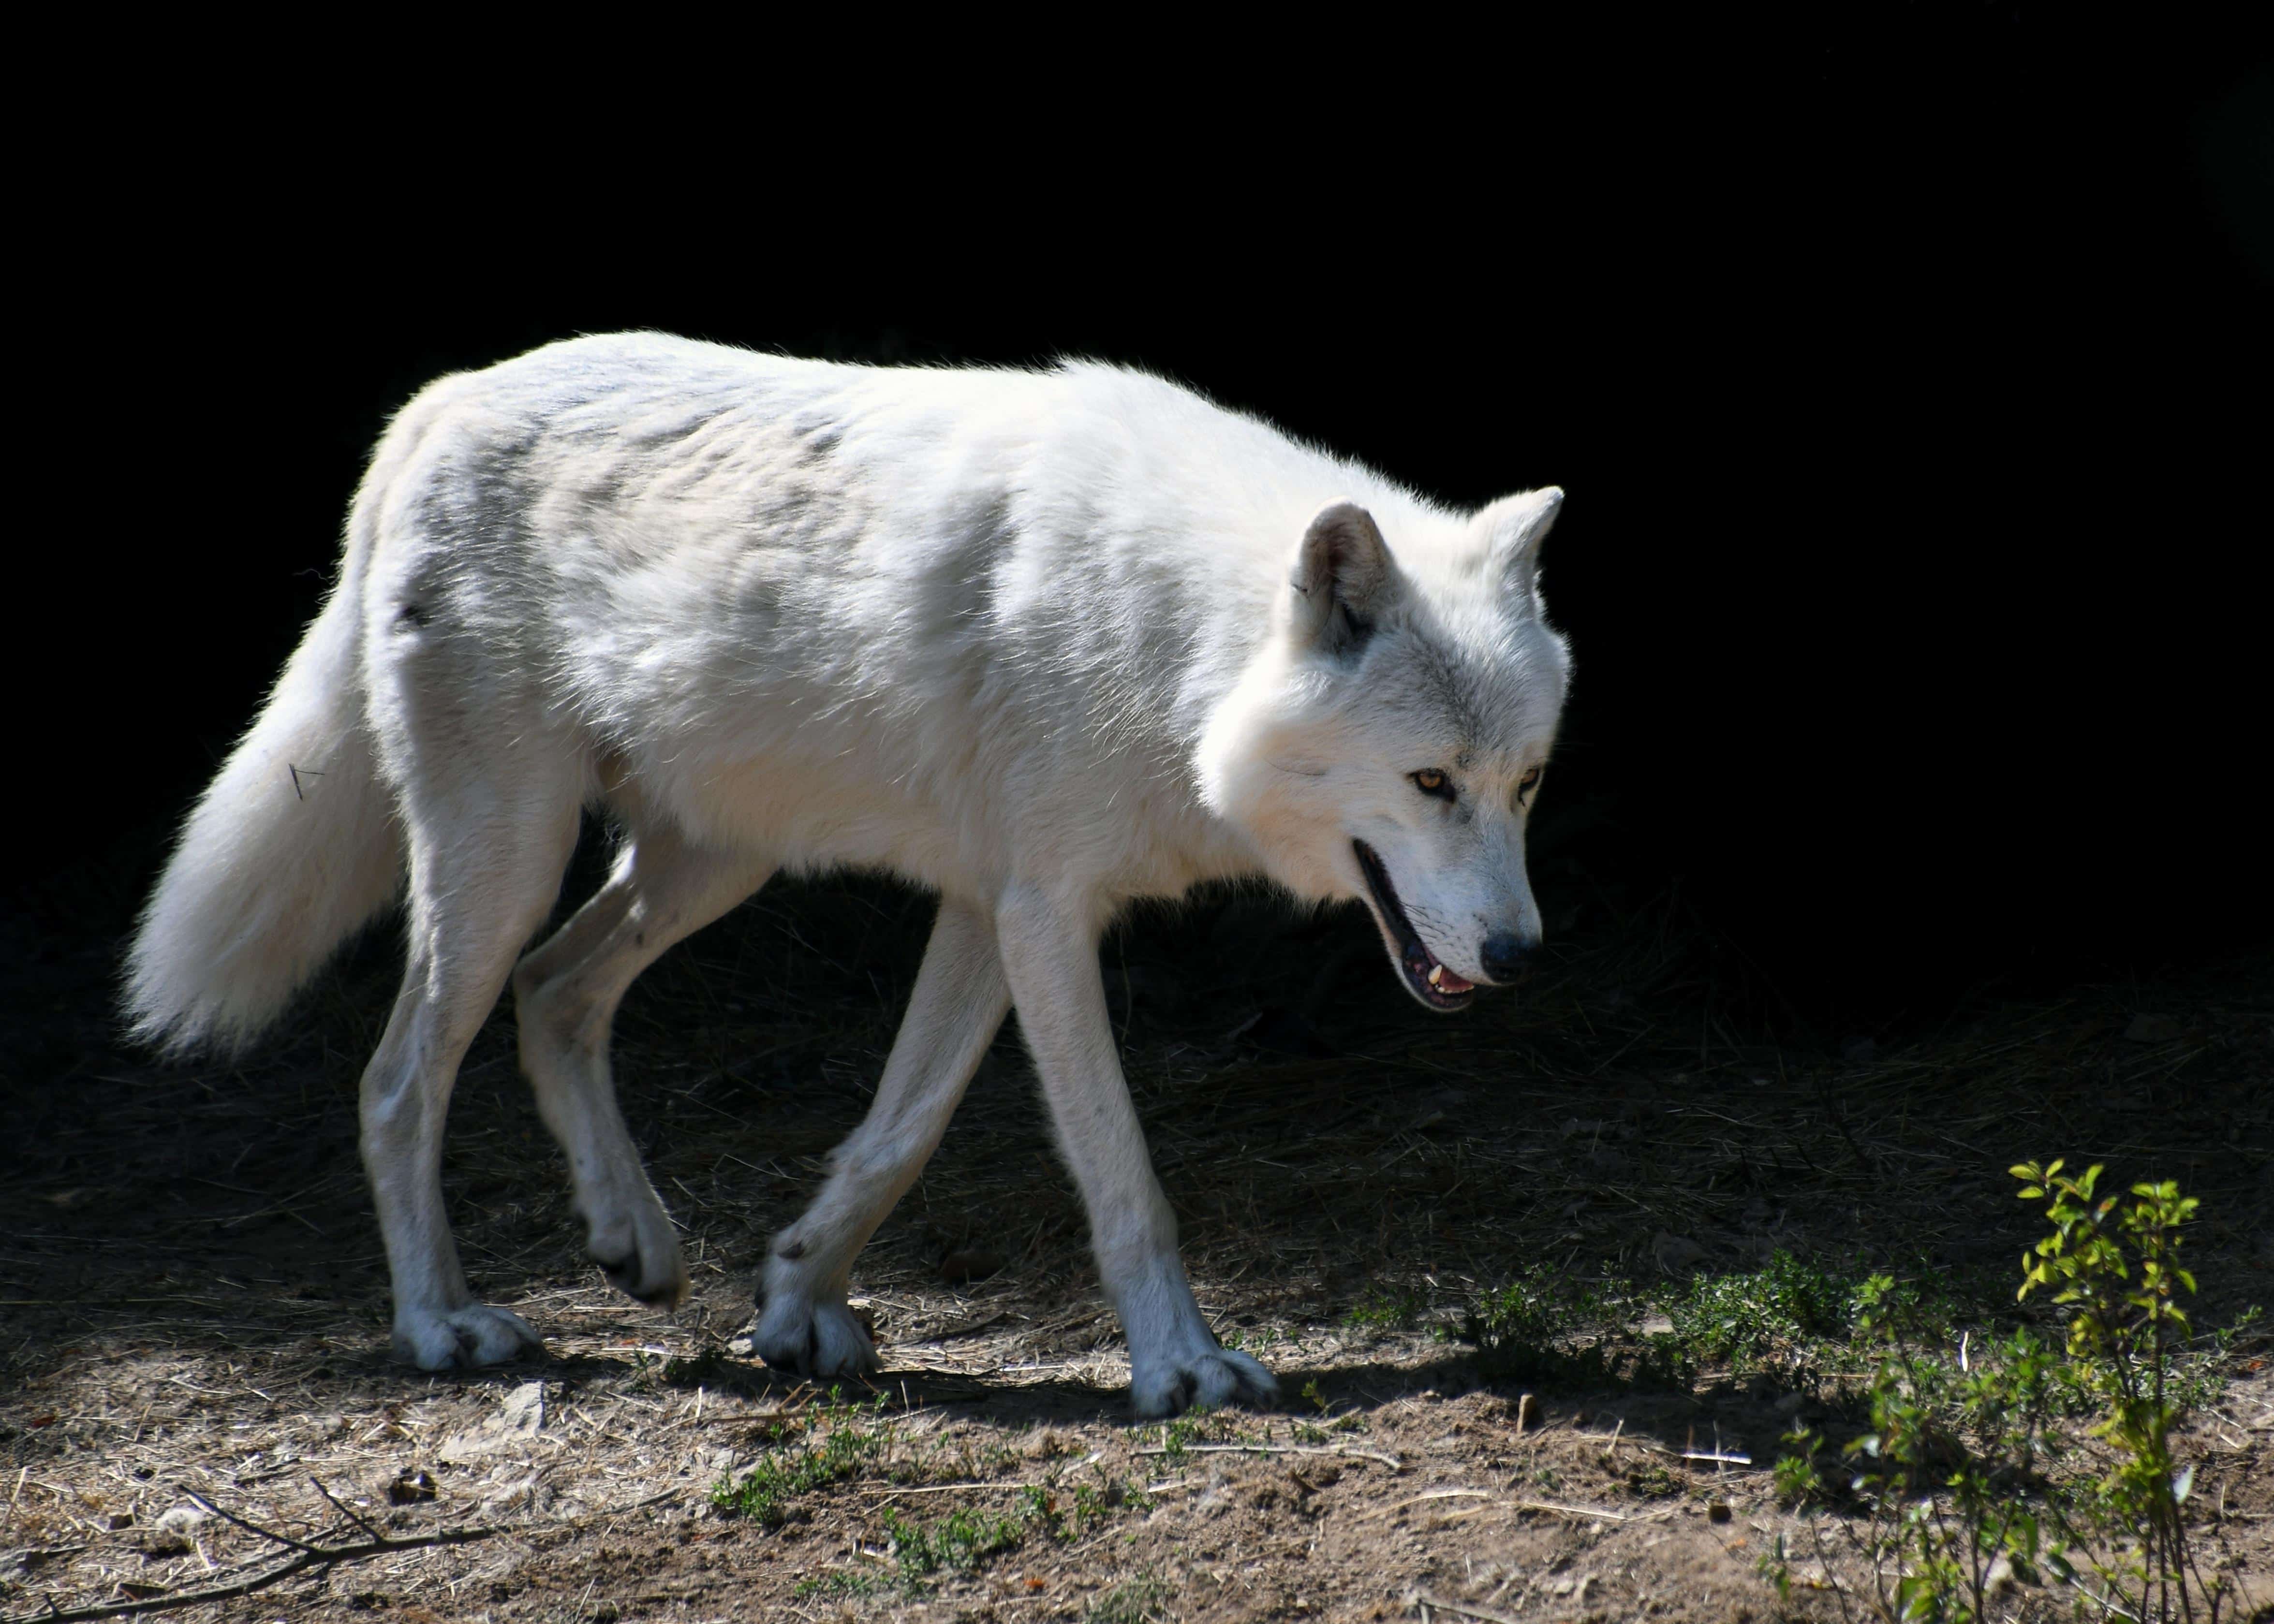 Free picture: white wolf, nature, albino, wildlife, animal, outdoor, ground